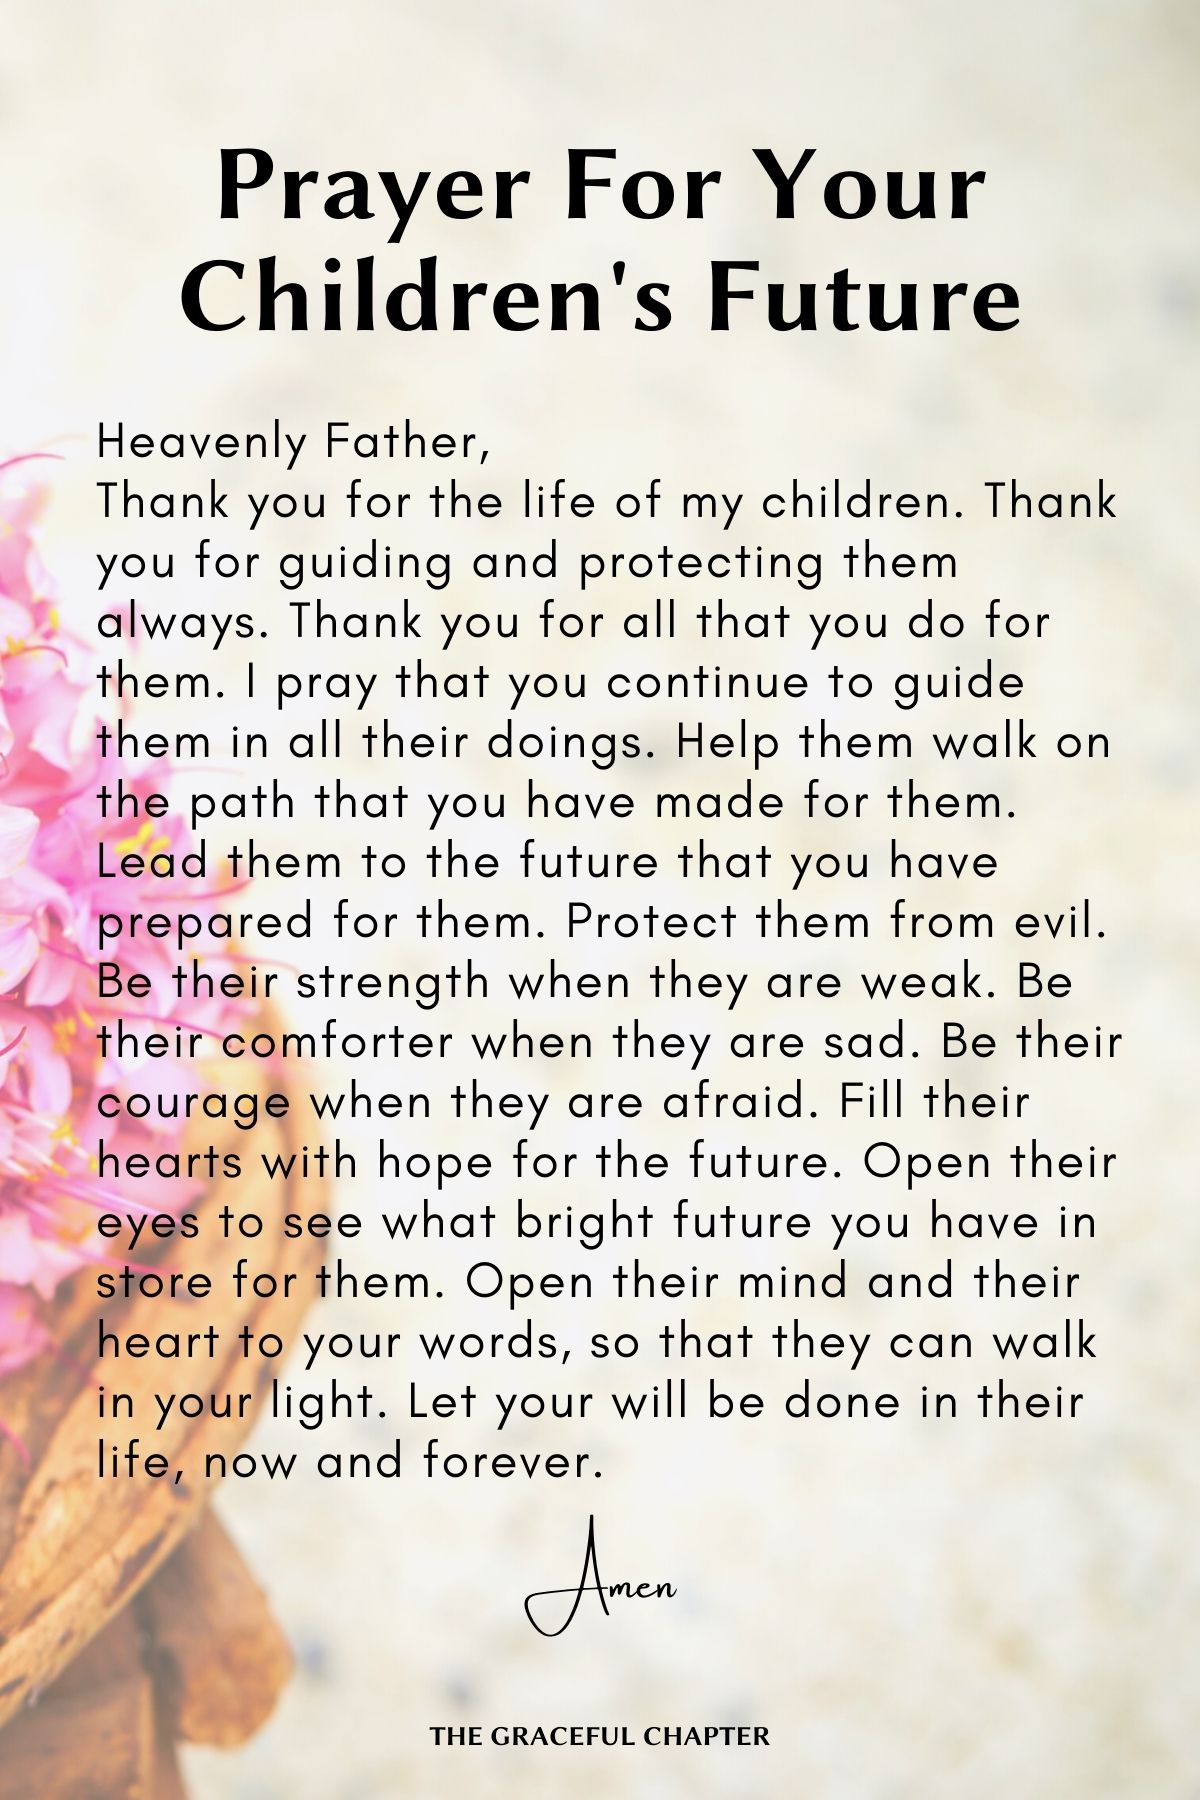 Prayer for your children's future